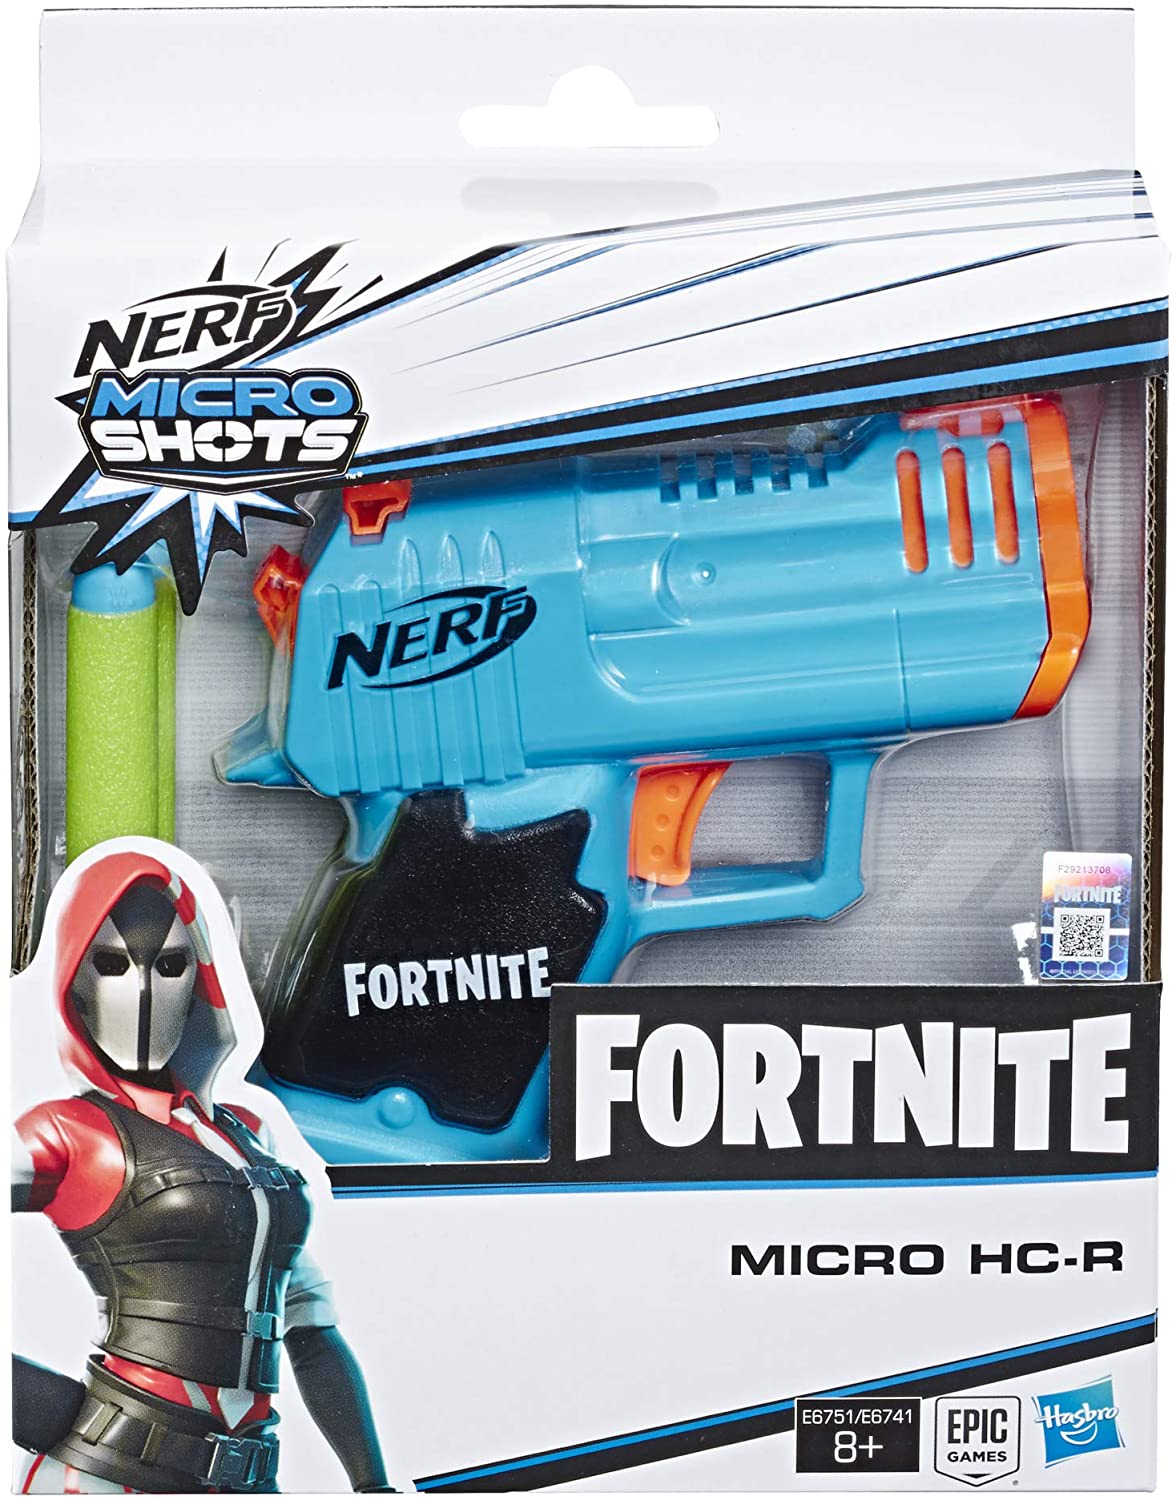 NERF MicroShots: Fortnite Micro HC-R